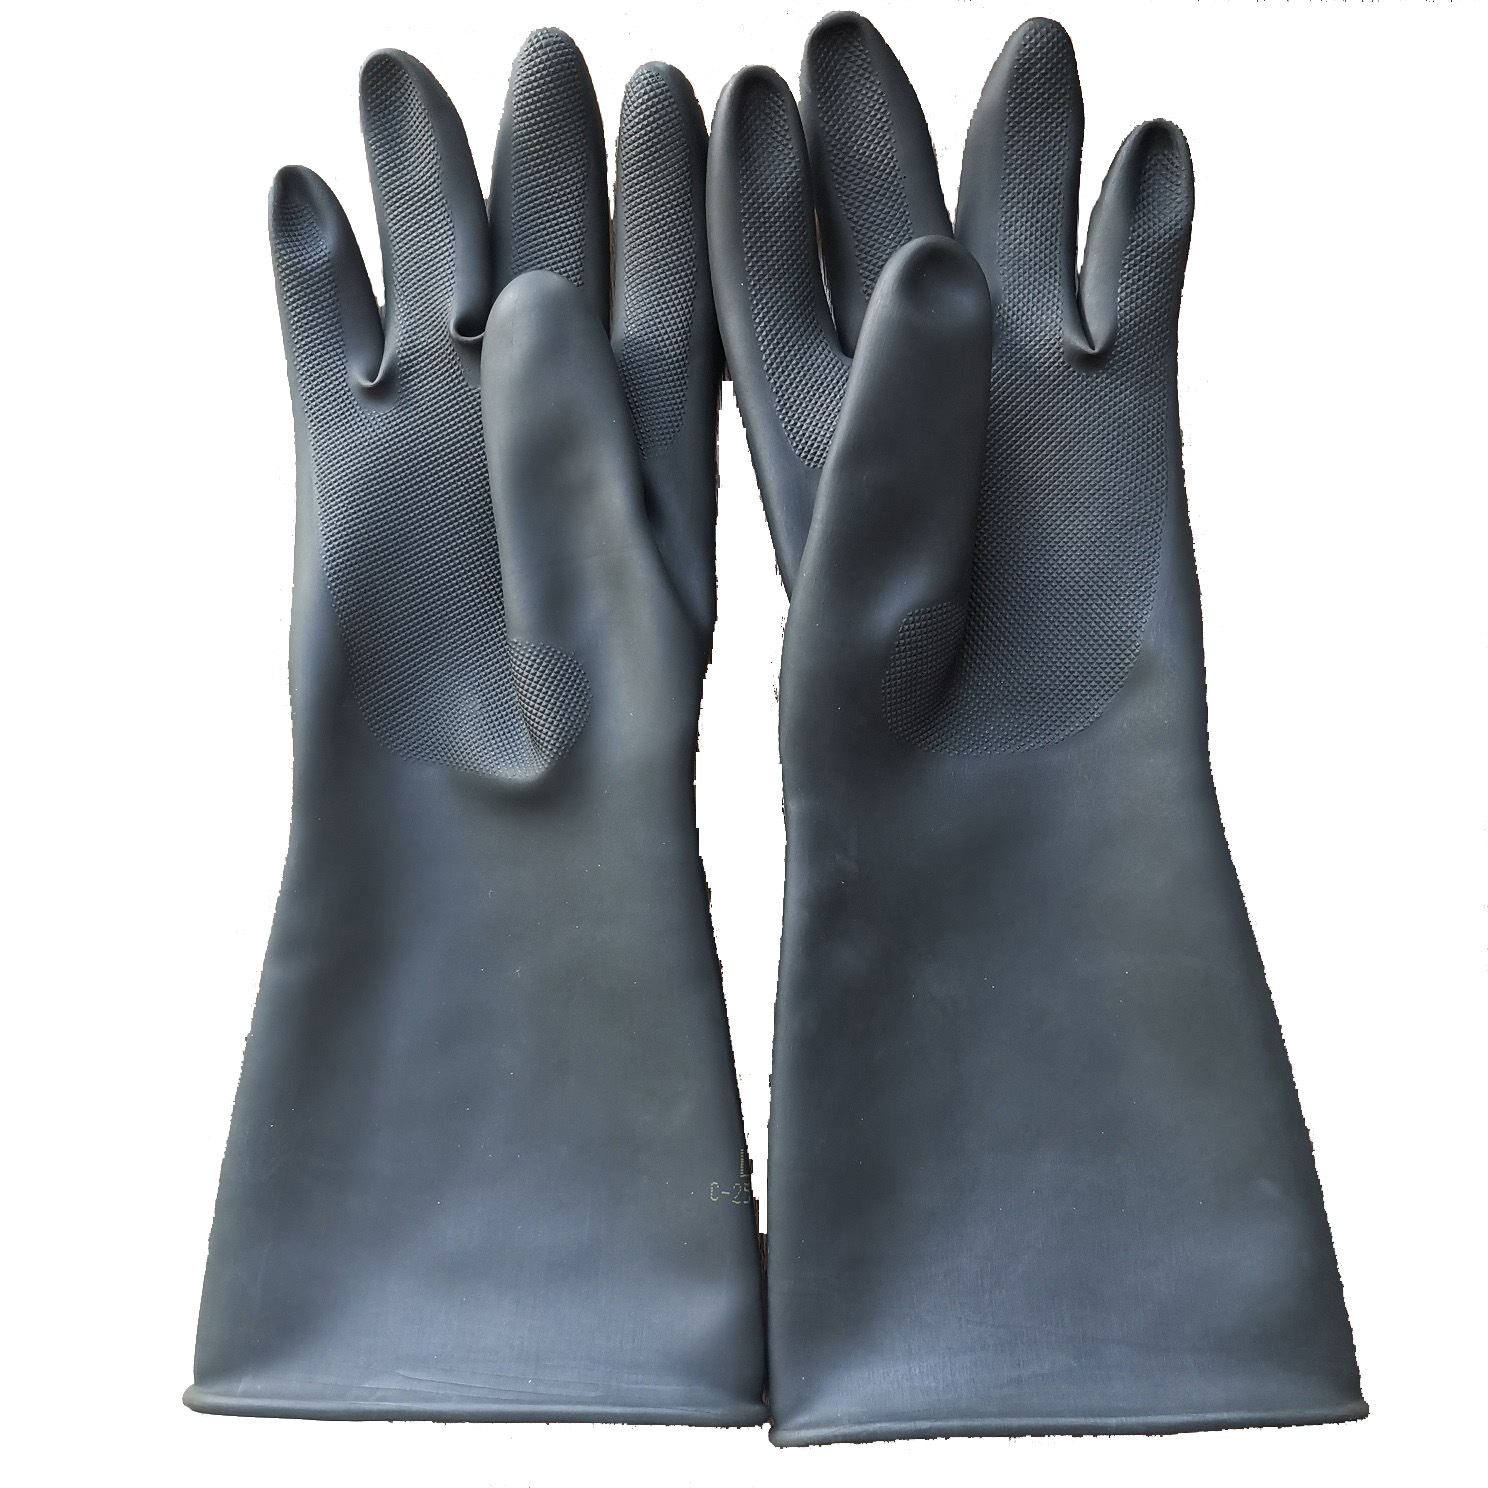 Black industrial rubber gloves